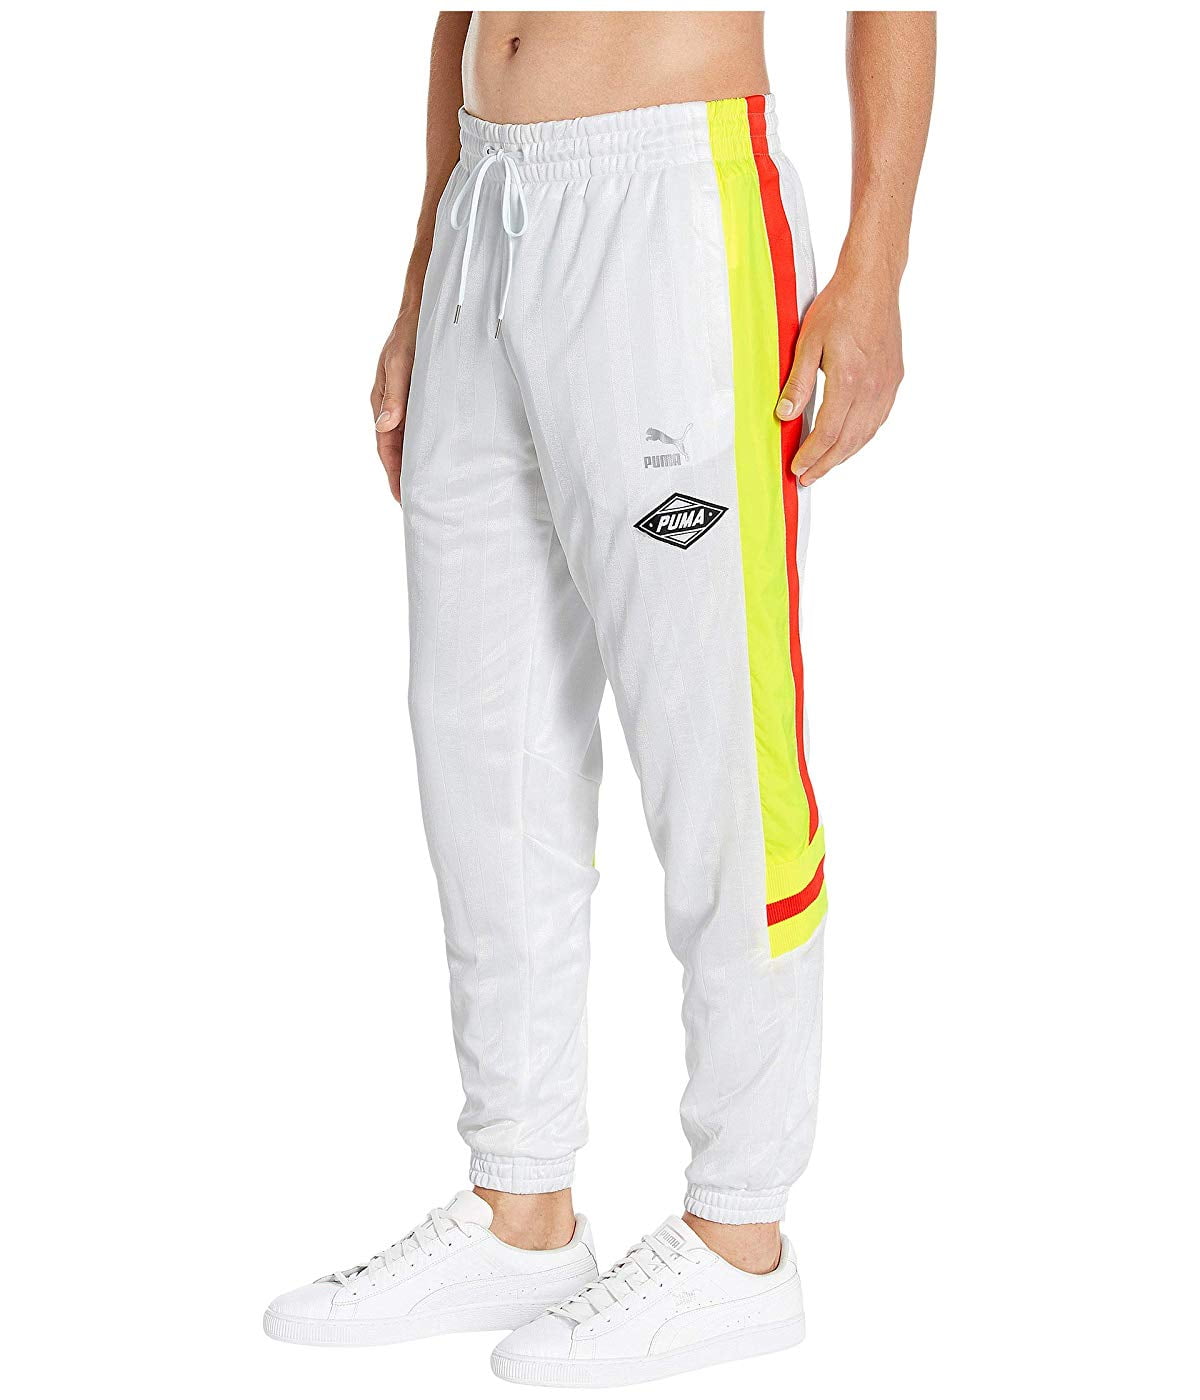 PUMA LuXTG Luxe Woven Pants PUMA White - Walmart.com